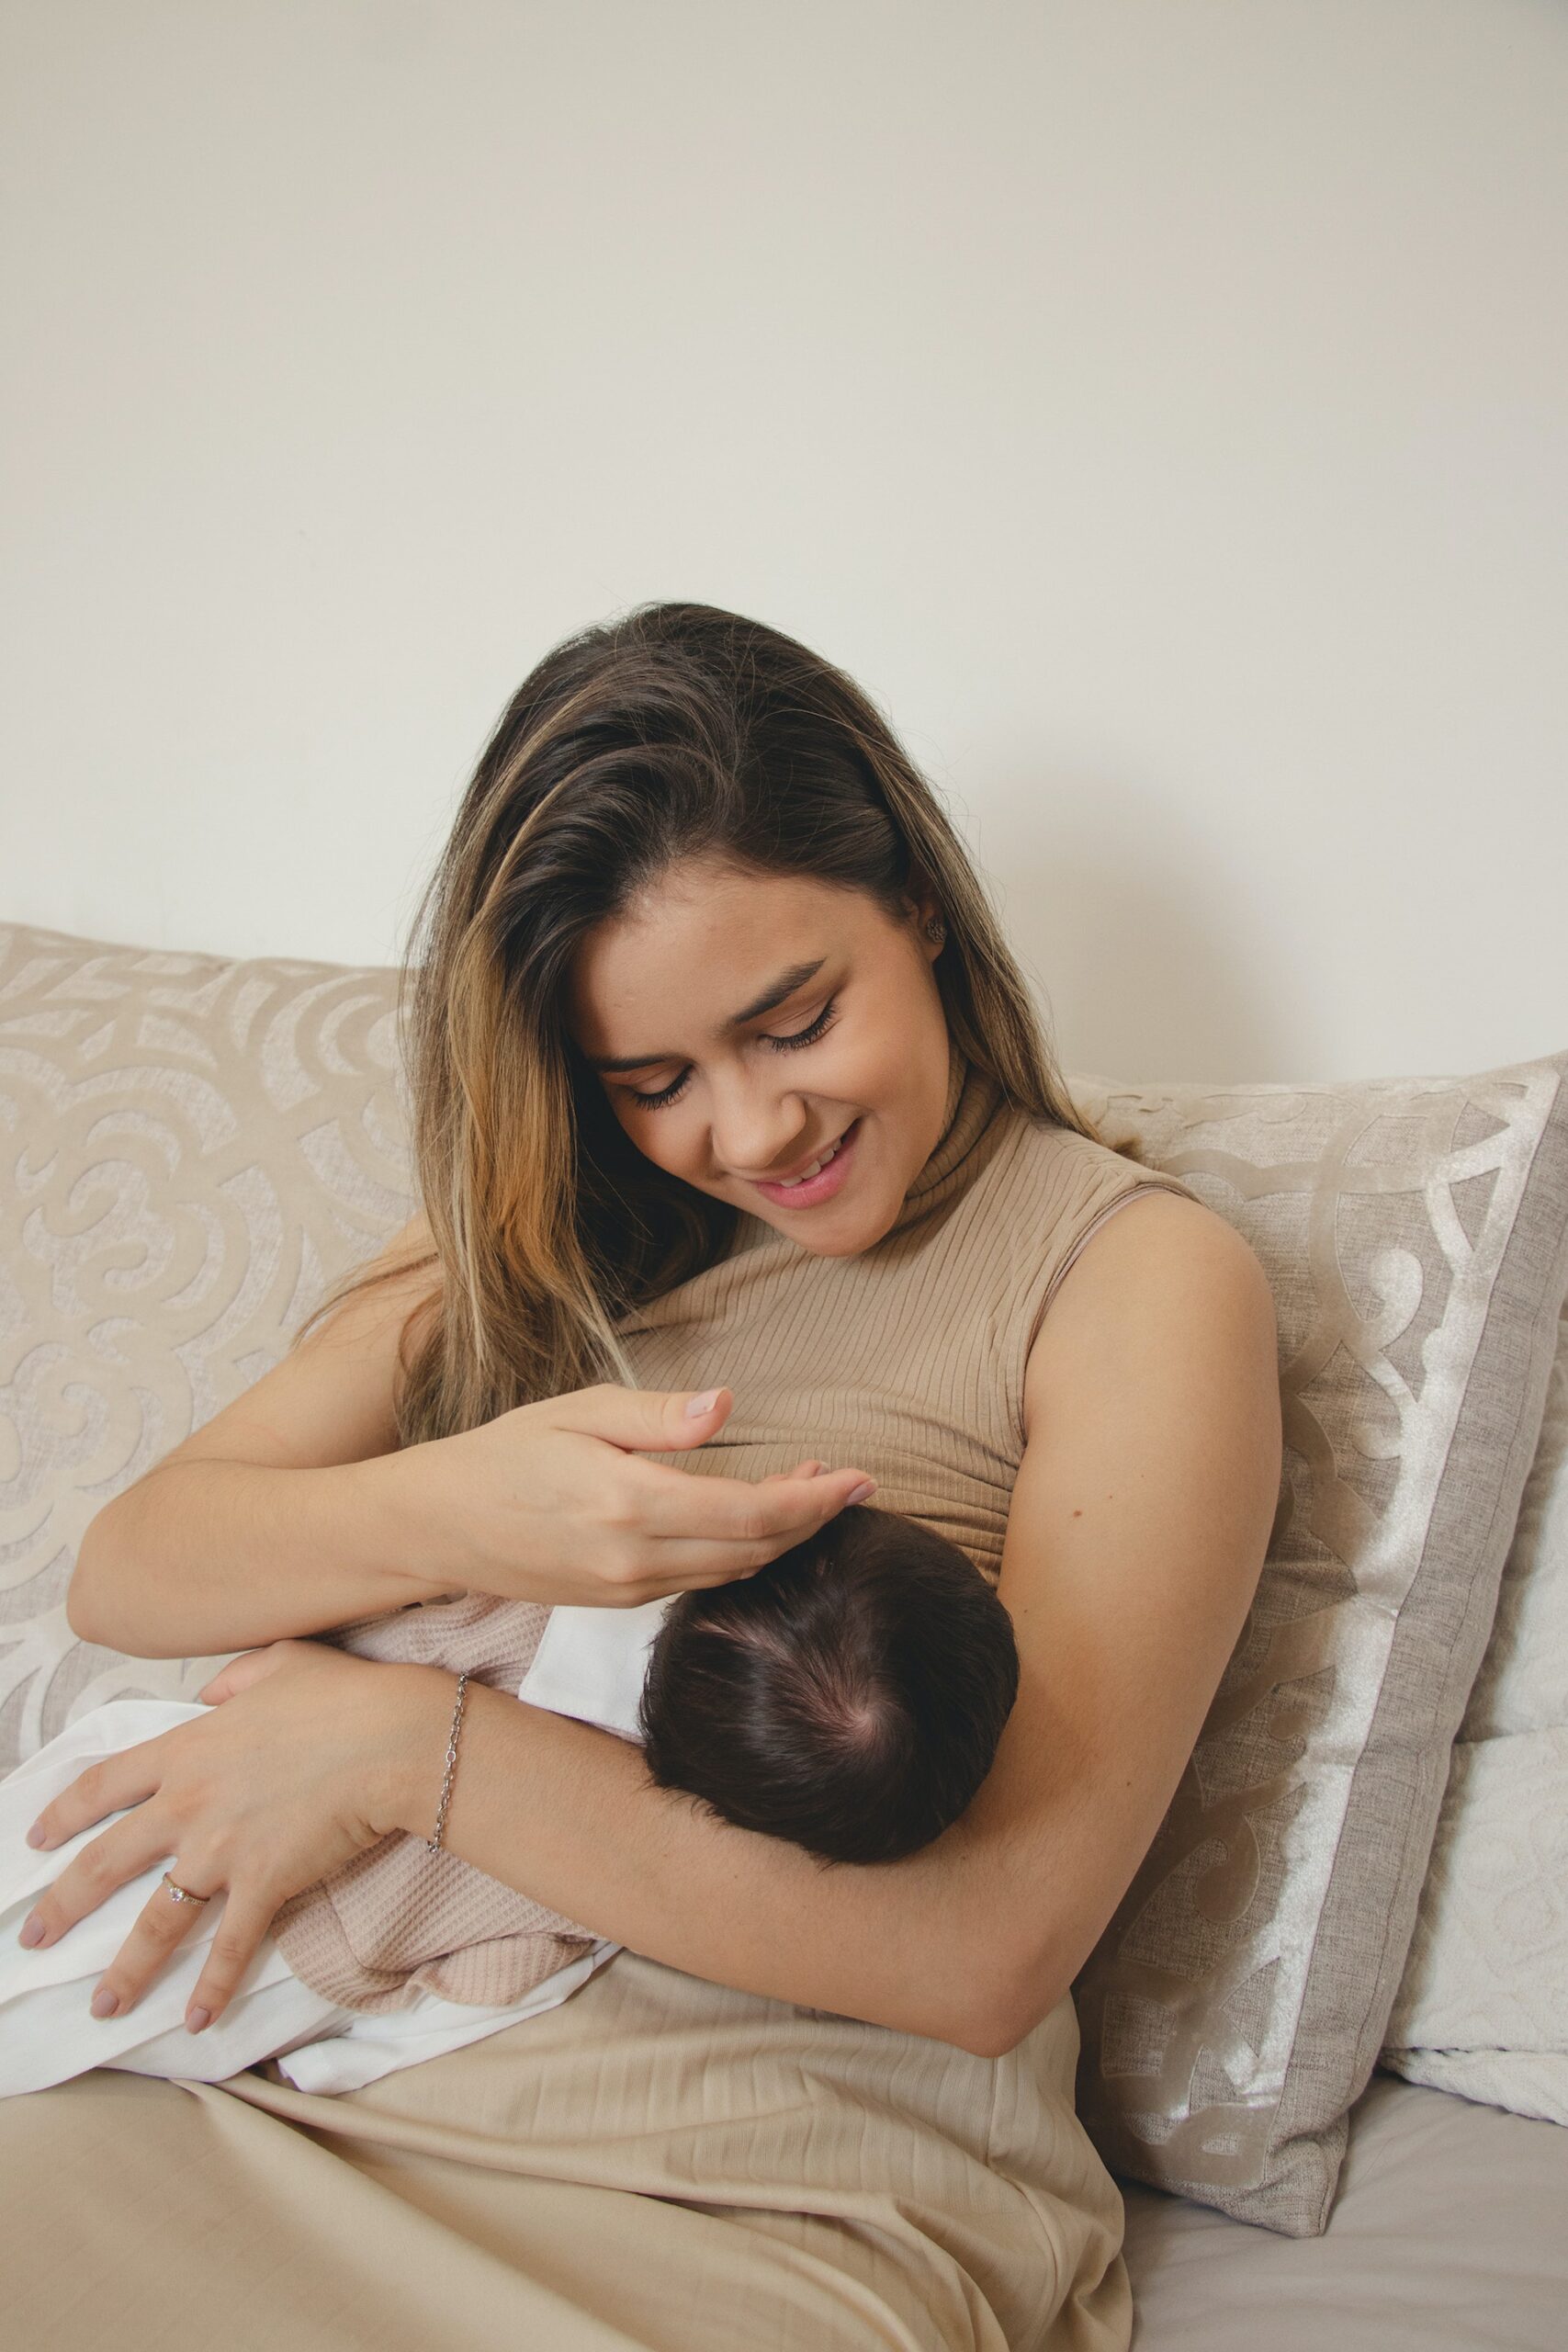 A mom breastfeeding her sleeping baby